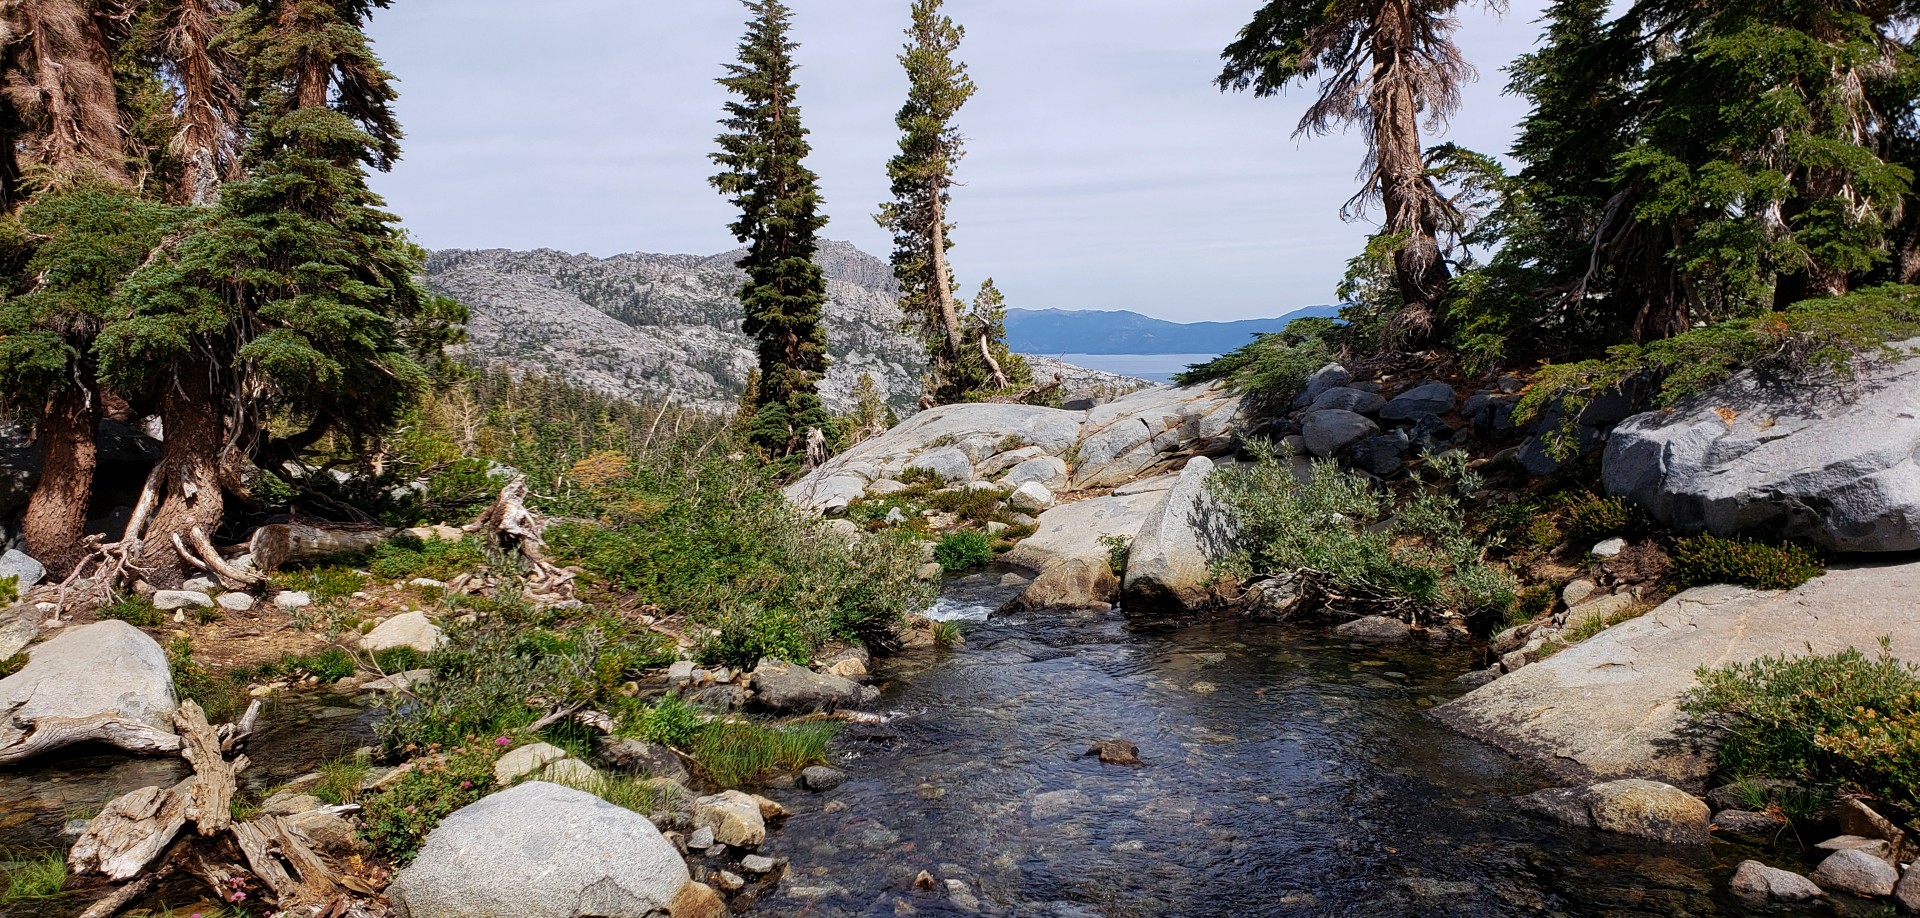 a stream runs through a rocky area with trees